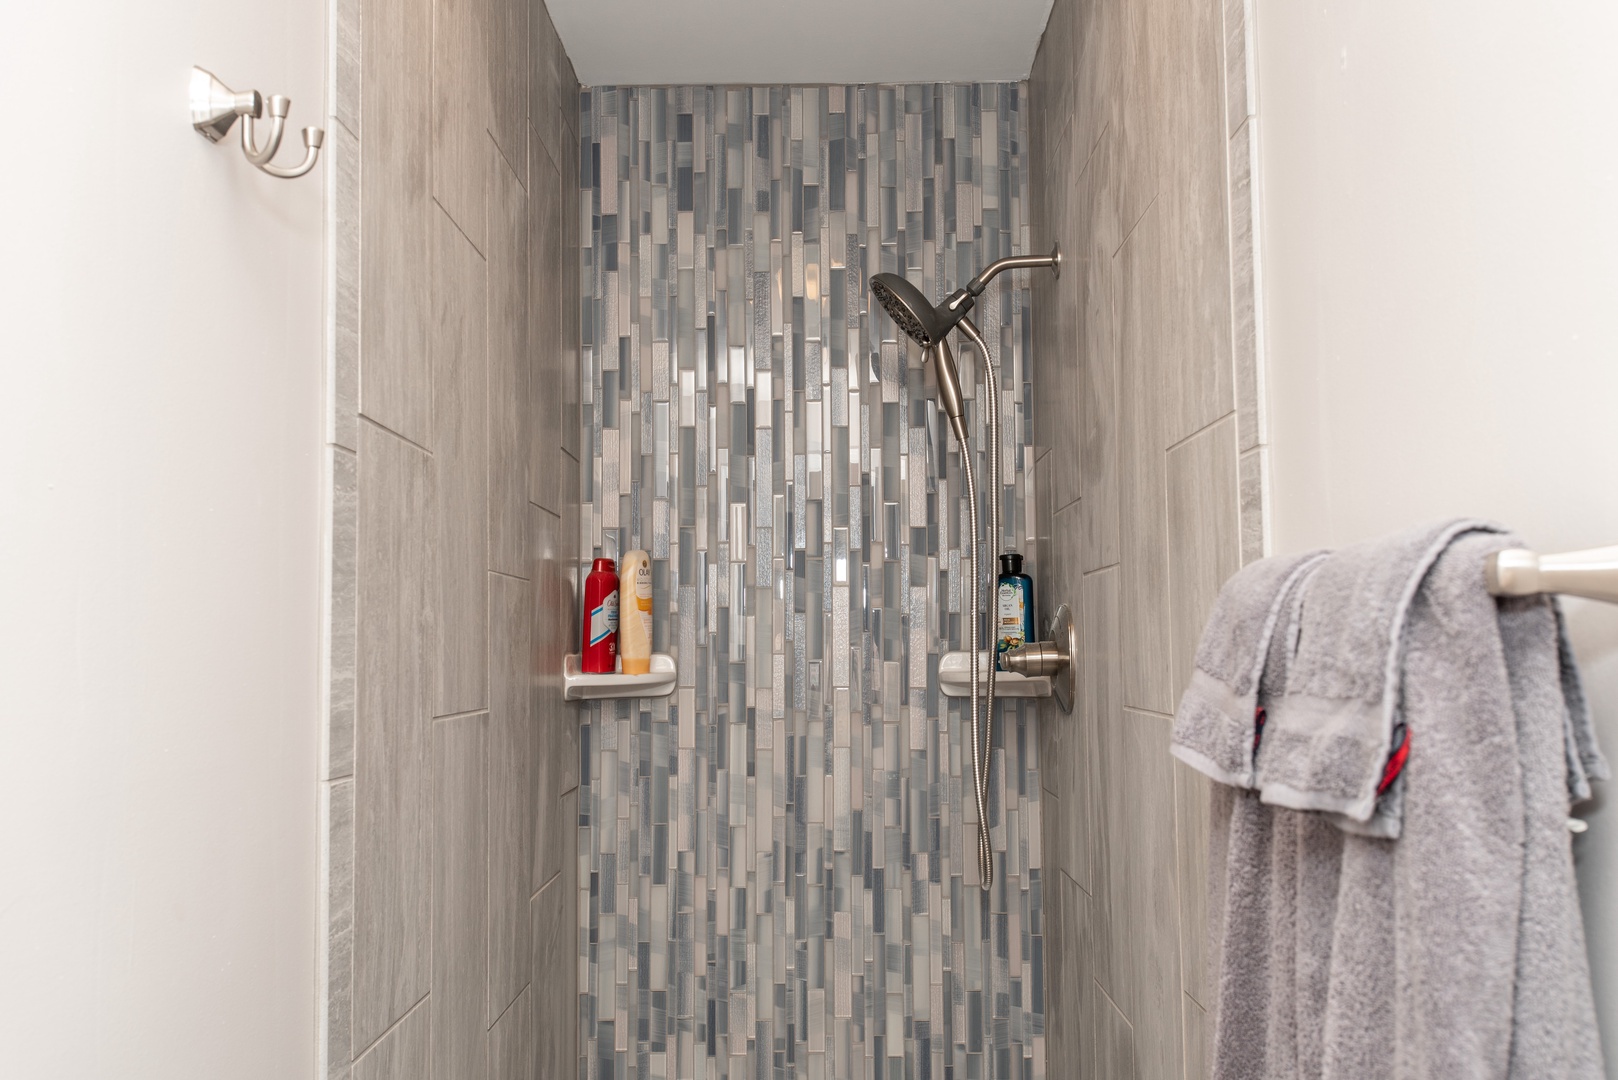 Apt 1 – The full bathroom includes a single vanity & walk-in shower